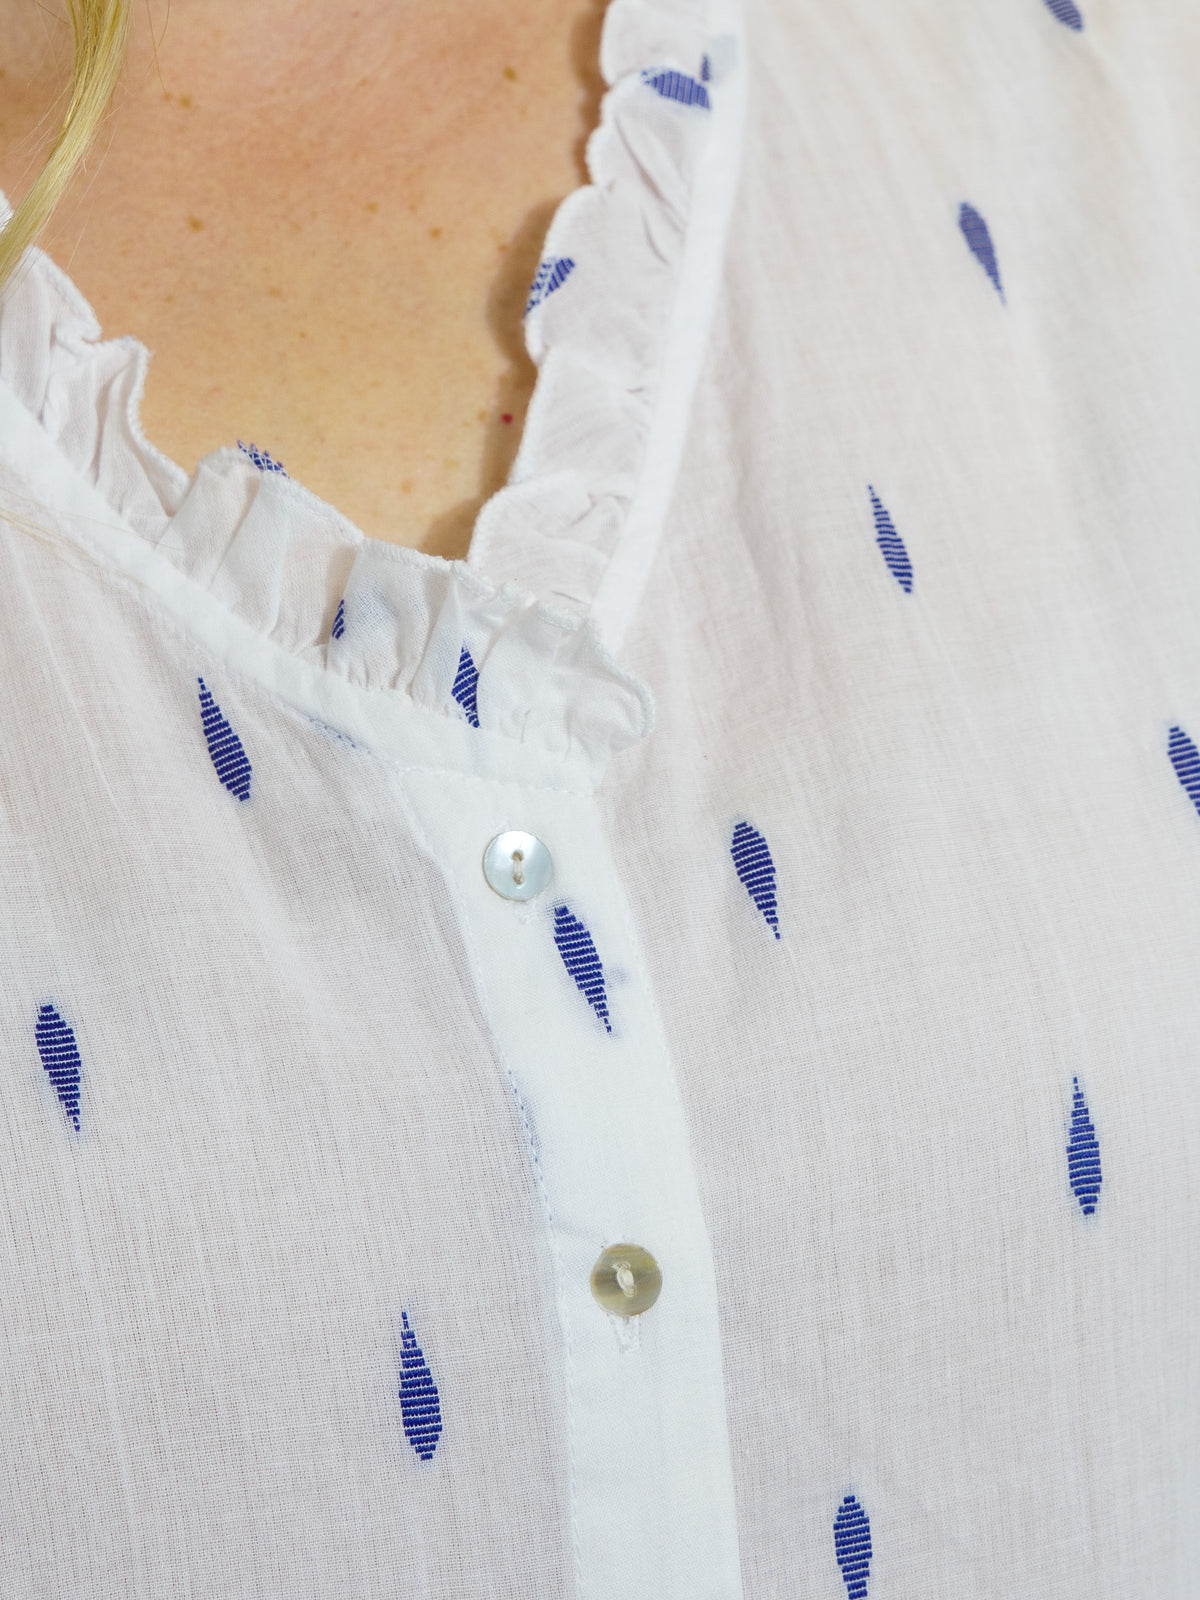 Capricorn Shirt in Blue Leaf motif on white